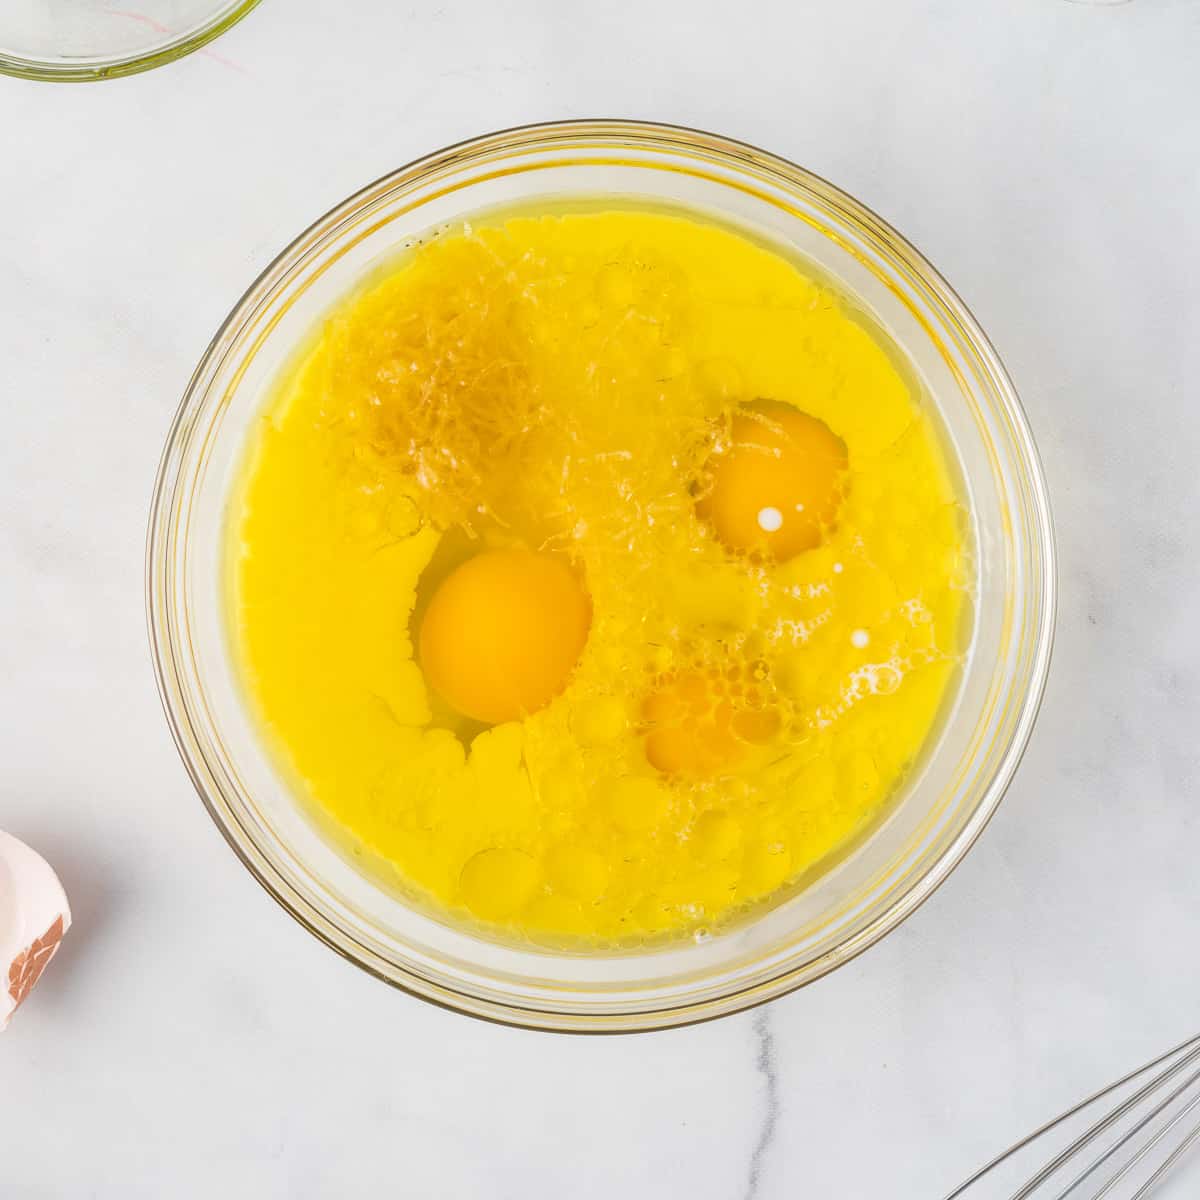 eggs, oil, lemon zest, and milk in a bowl